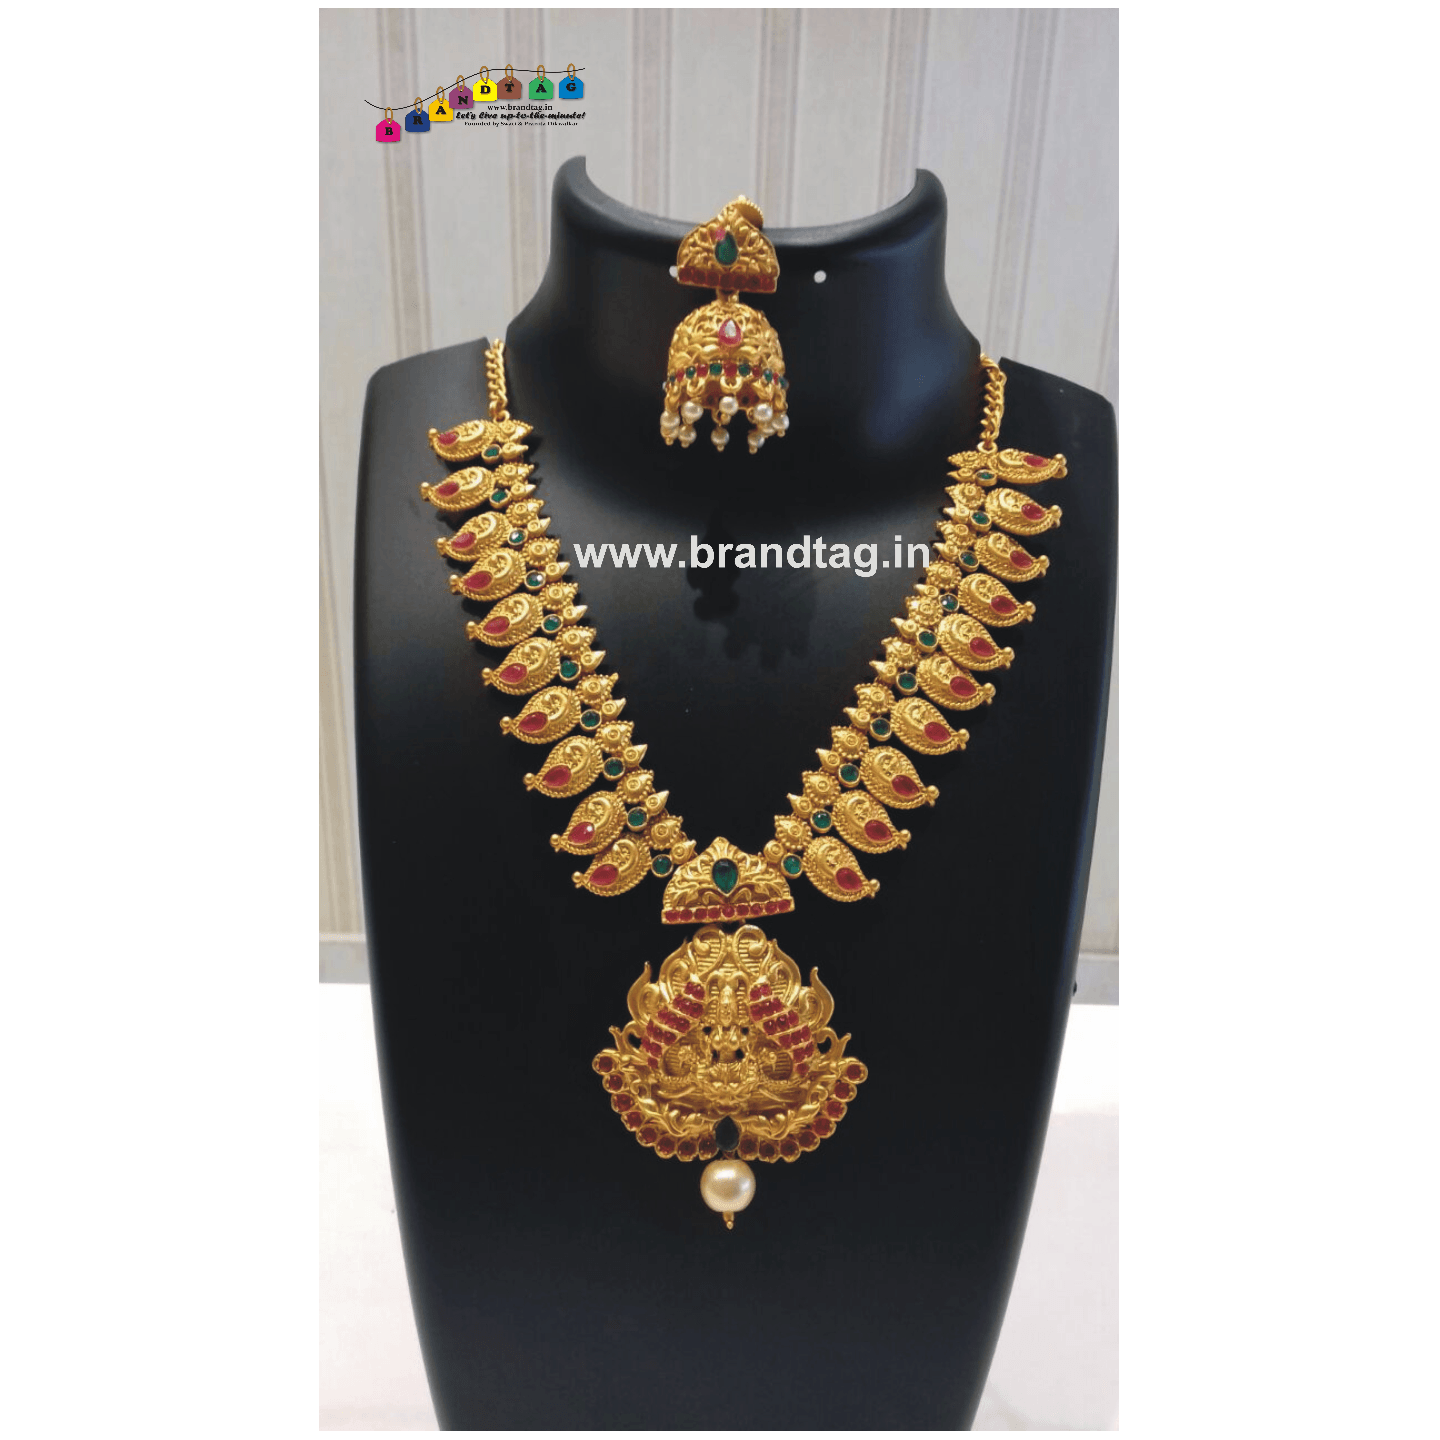 Diwali Collection - Long Golden Necklace set!